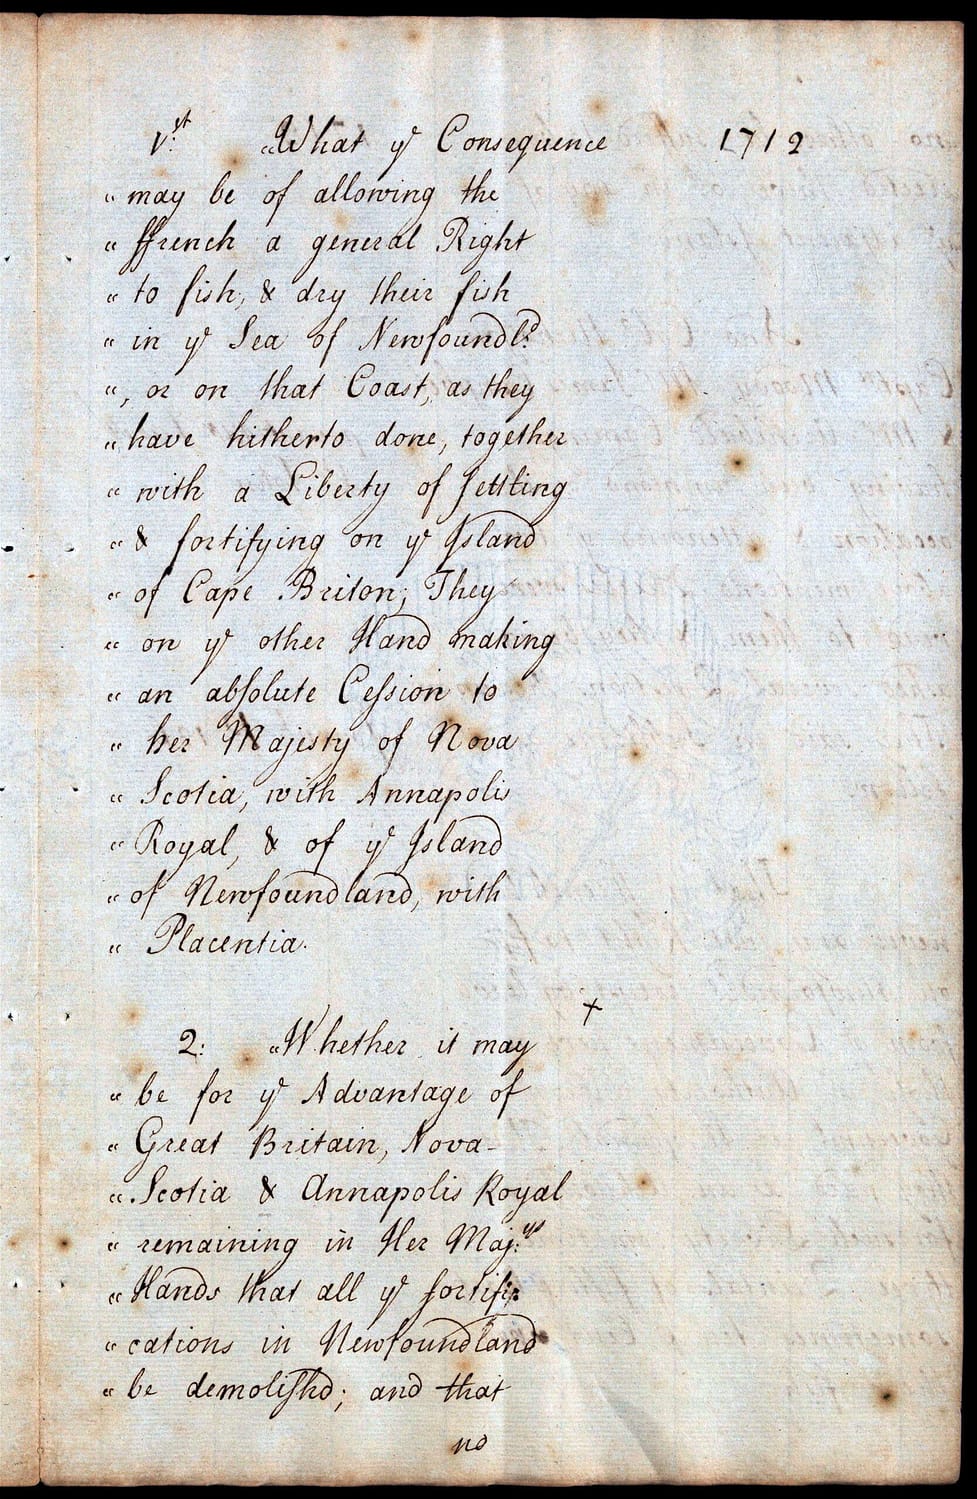 Legislative history regarding treaties of commerce with France, Spain relating to New Foundland, Nova Scotia, and Cape Breton